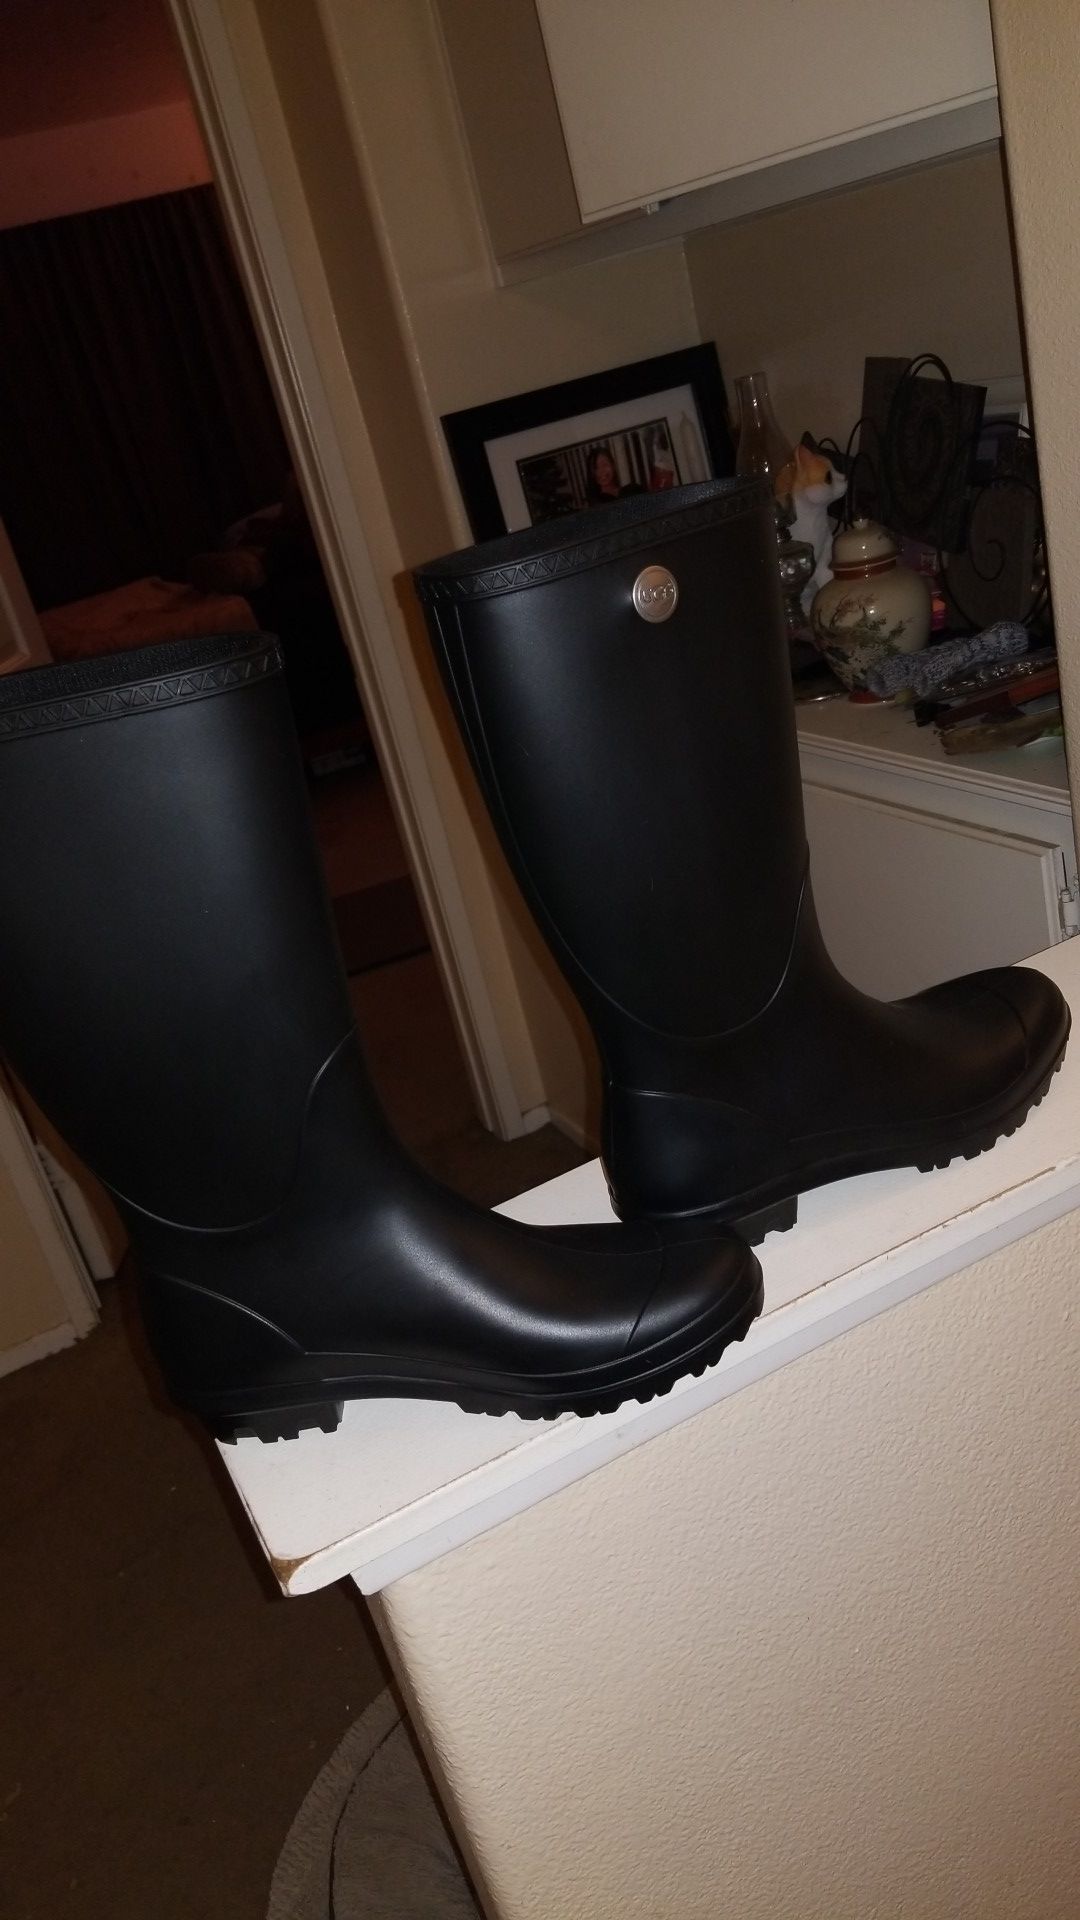 Matte Ugg Shelby Rain boots - size 10 brand new